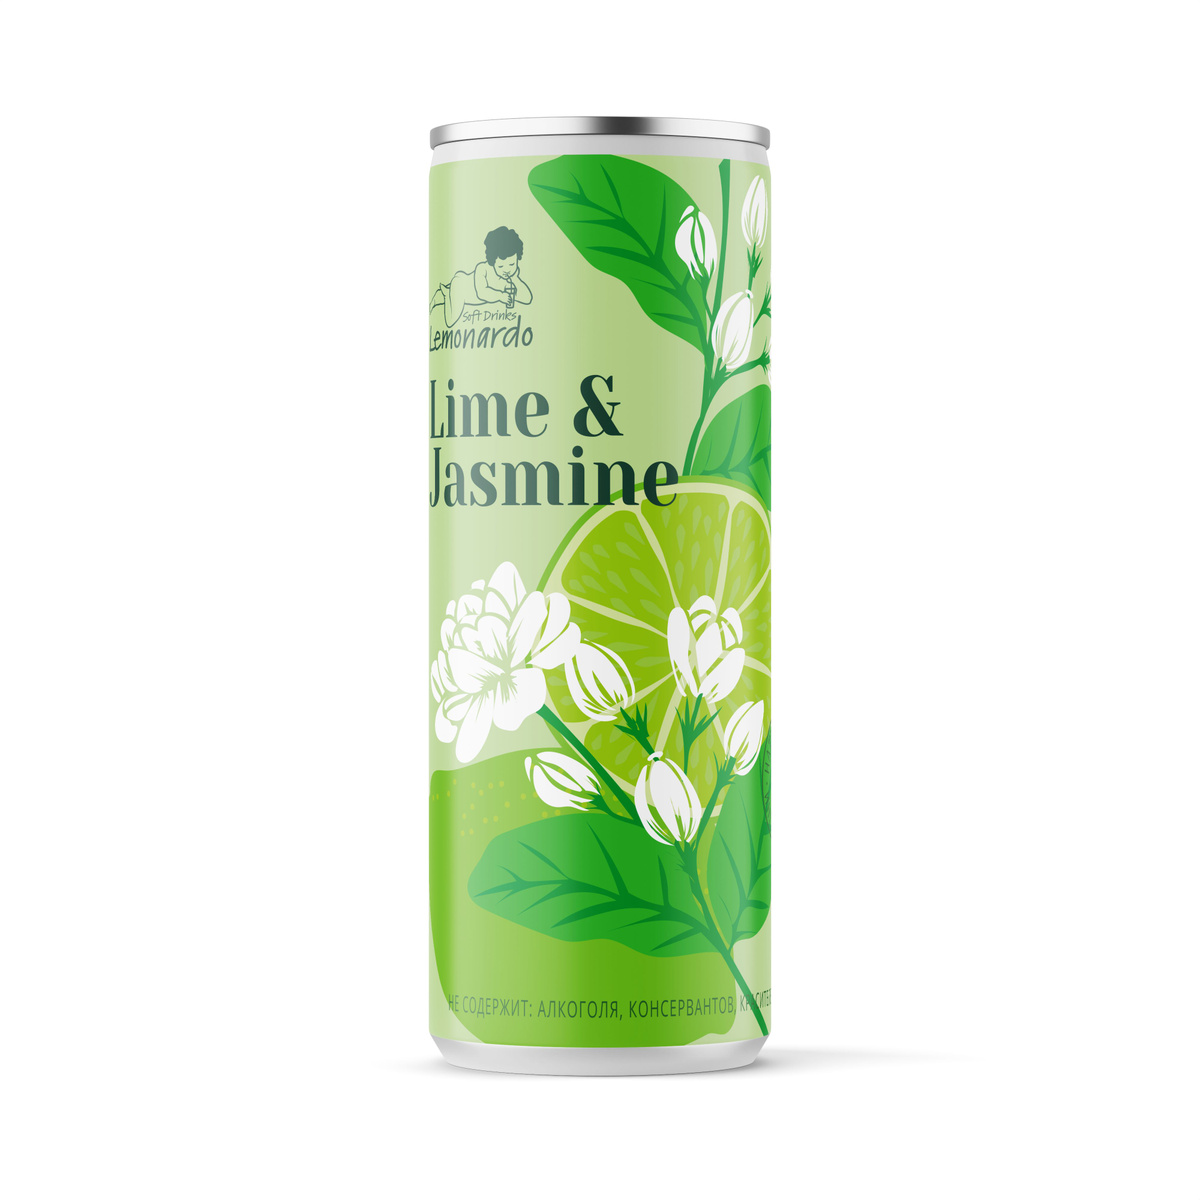 Натуральный лимонад Лайм и Жасмин / Lemonardo Lime & Jasmine